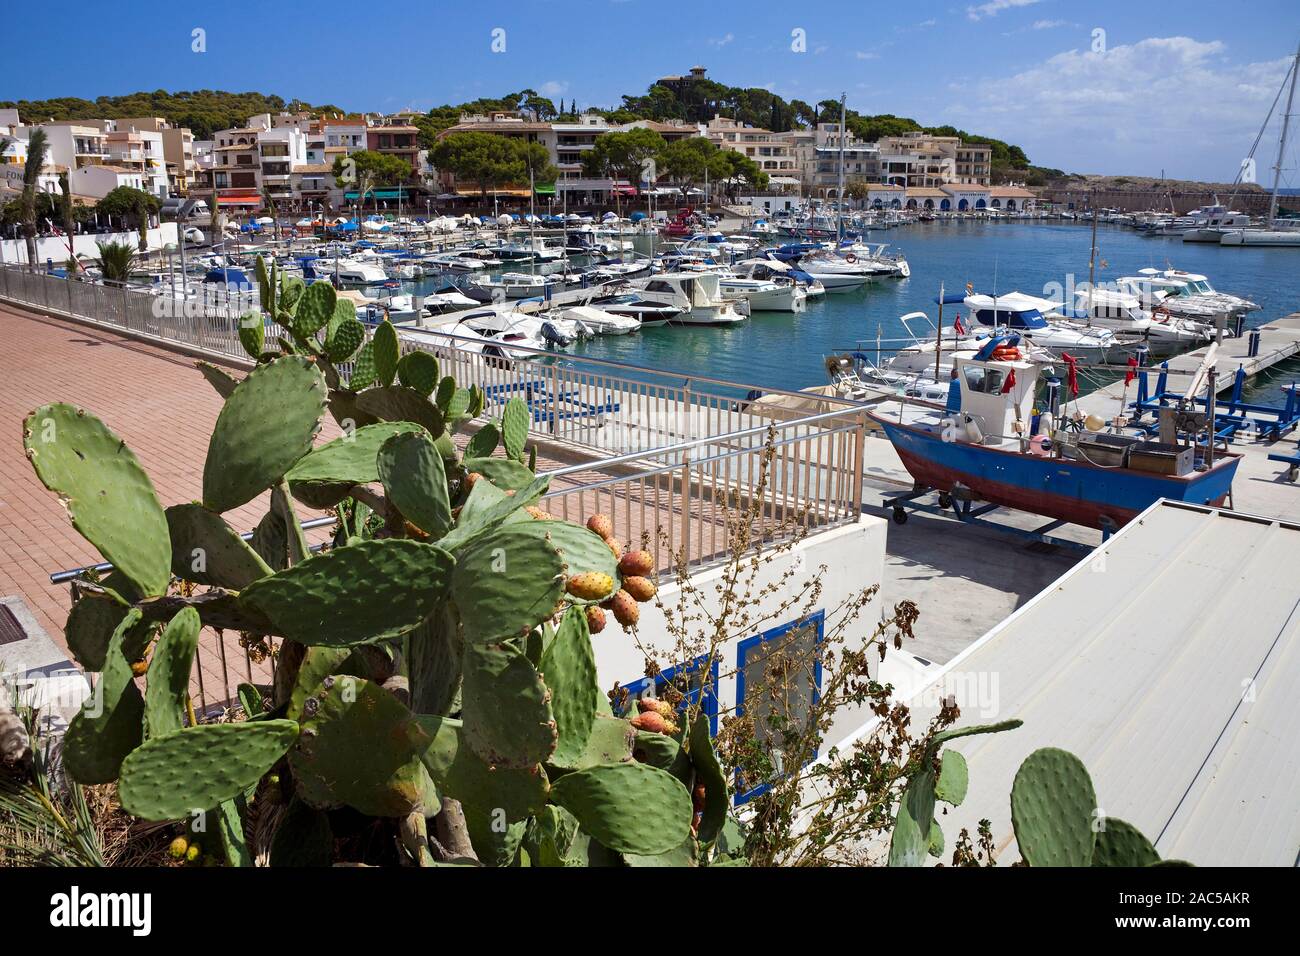 Harbour scene, boats in the harbour of Cala Ratjada, Mallorca, Balearic islands, Spain Stock Photo